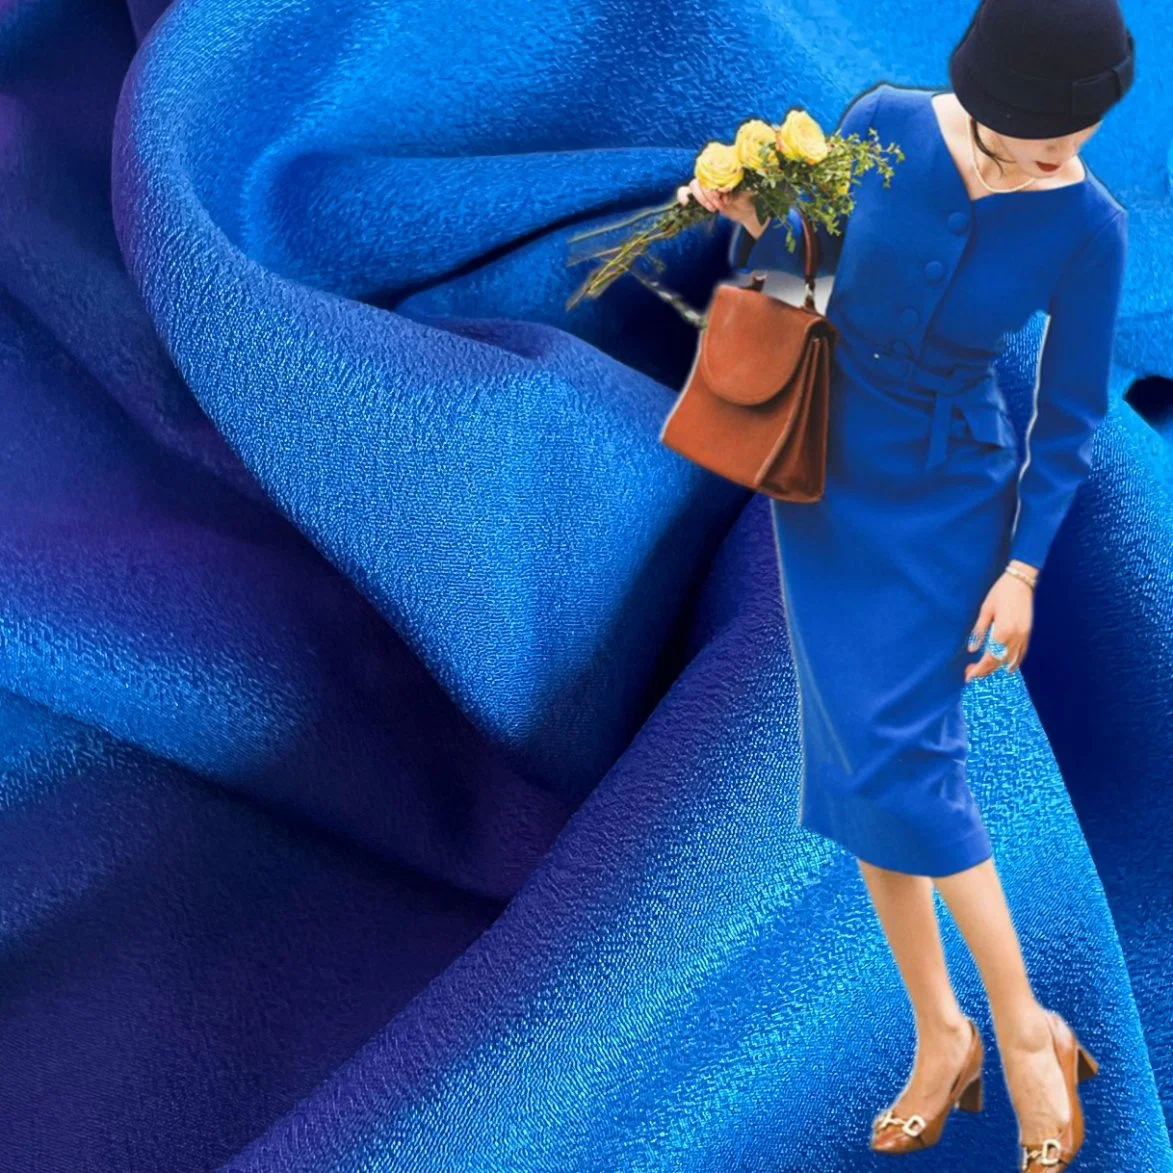 Tn Textile China Wholesale/Supplier Imitation Silk Fabric Garment Fabric Polyester Crepe Chiffon Fabric for Dress